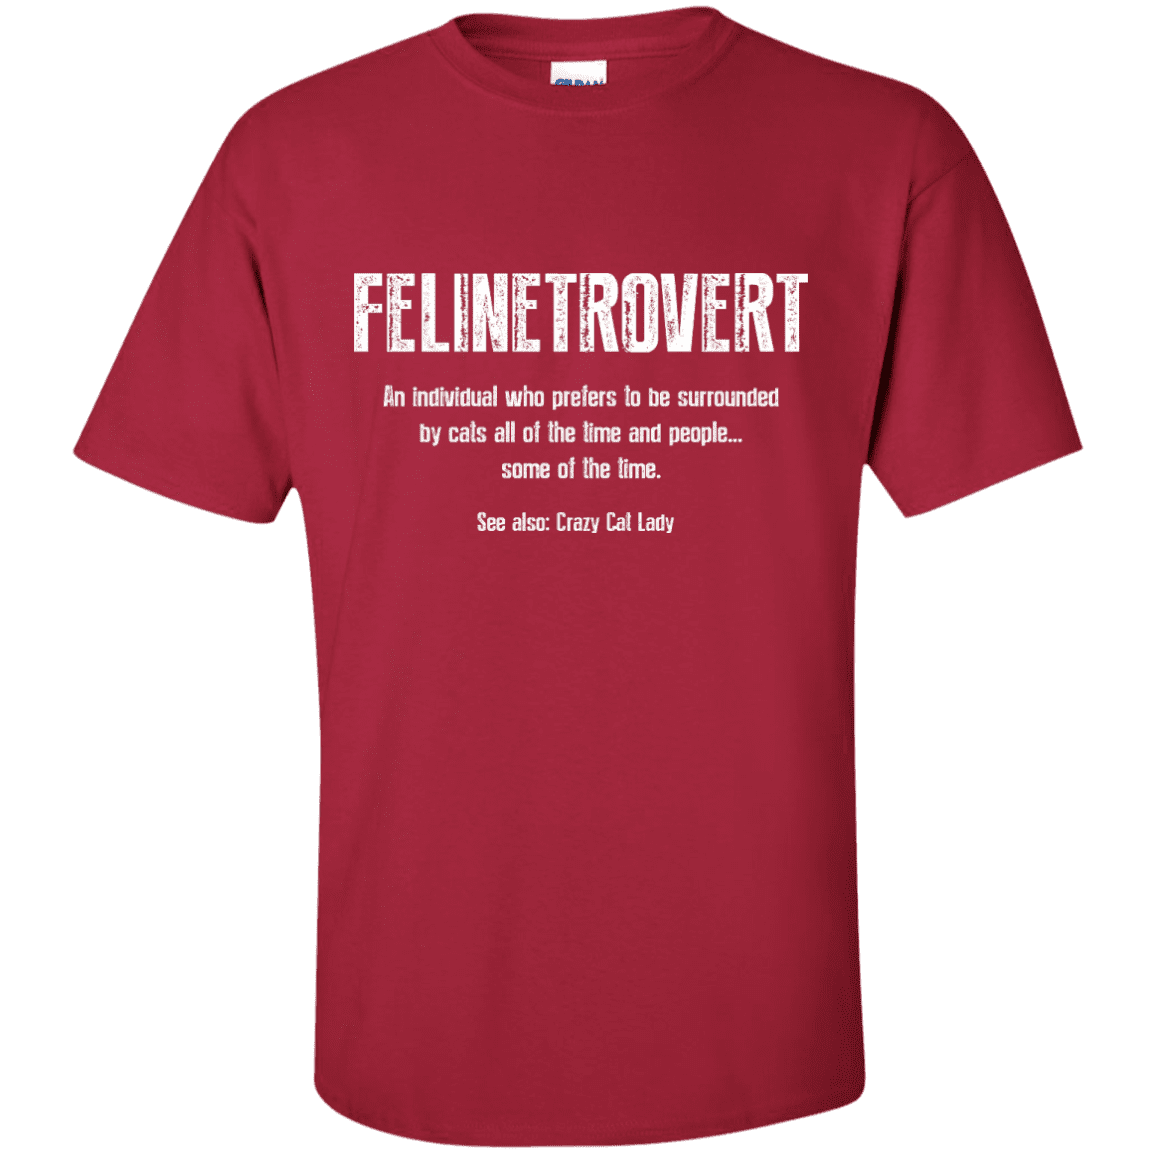 Felinetrovert - T Shirt.